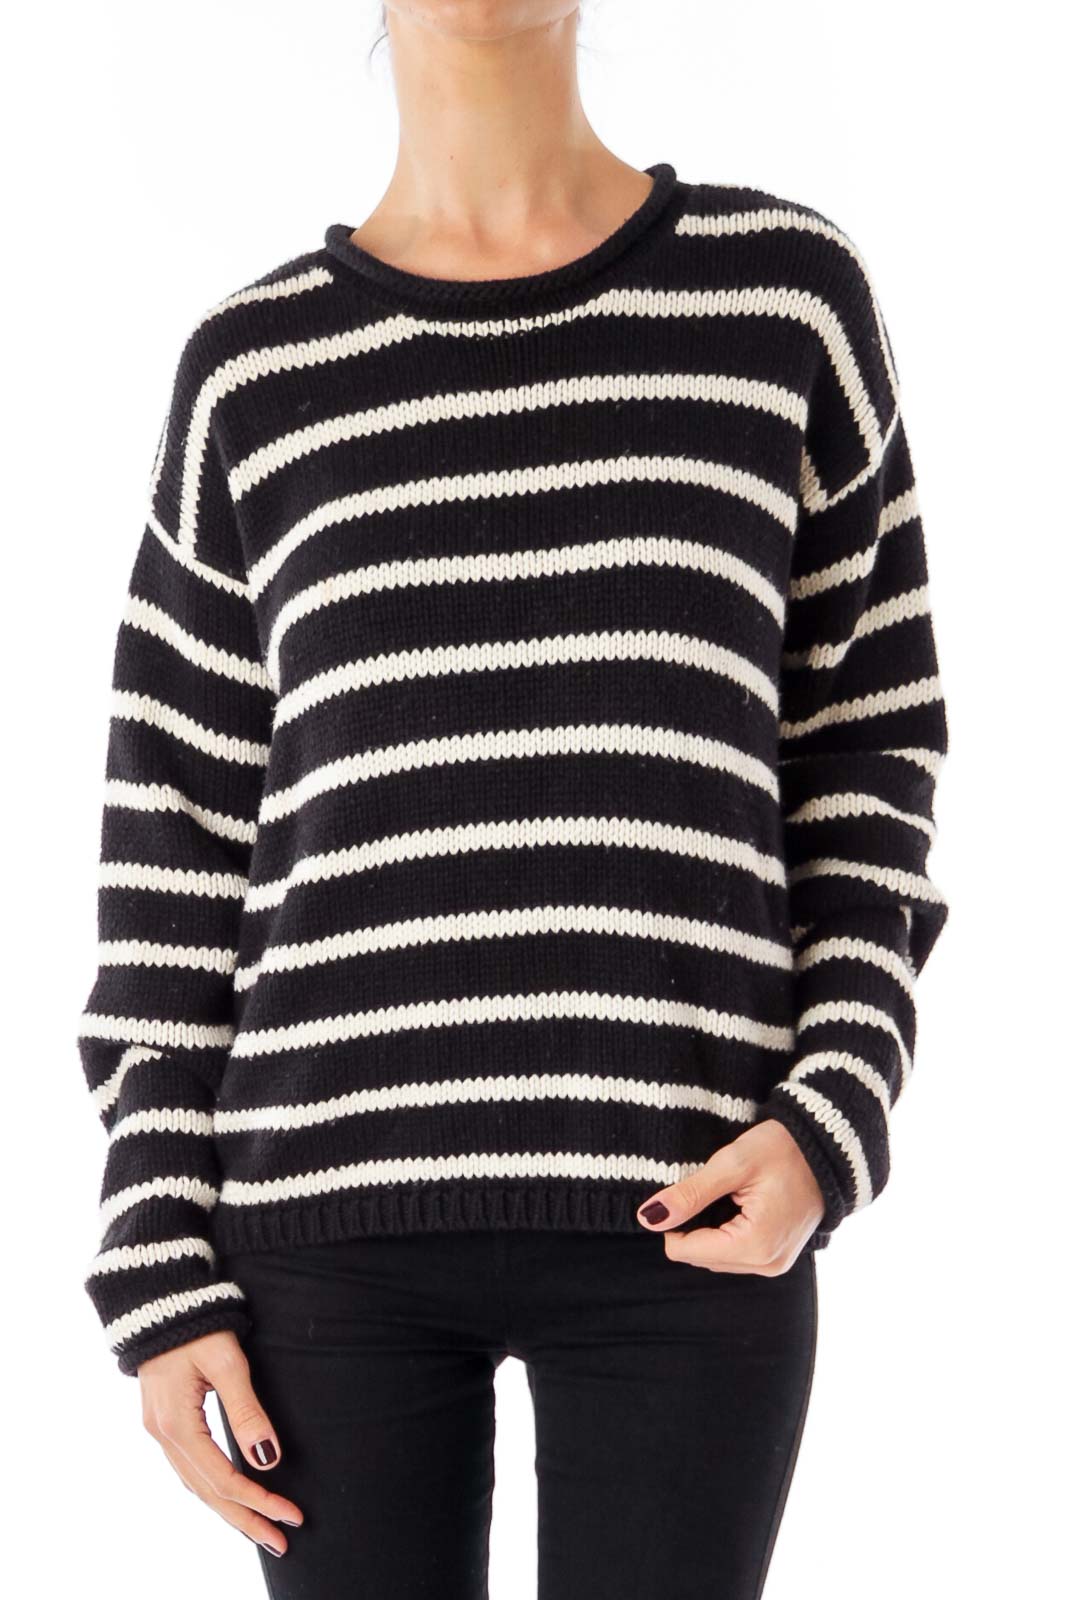 Black & White Stripe Sweater Front